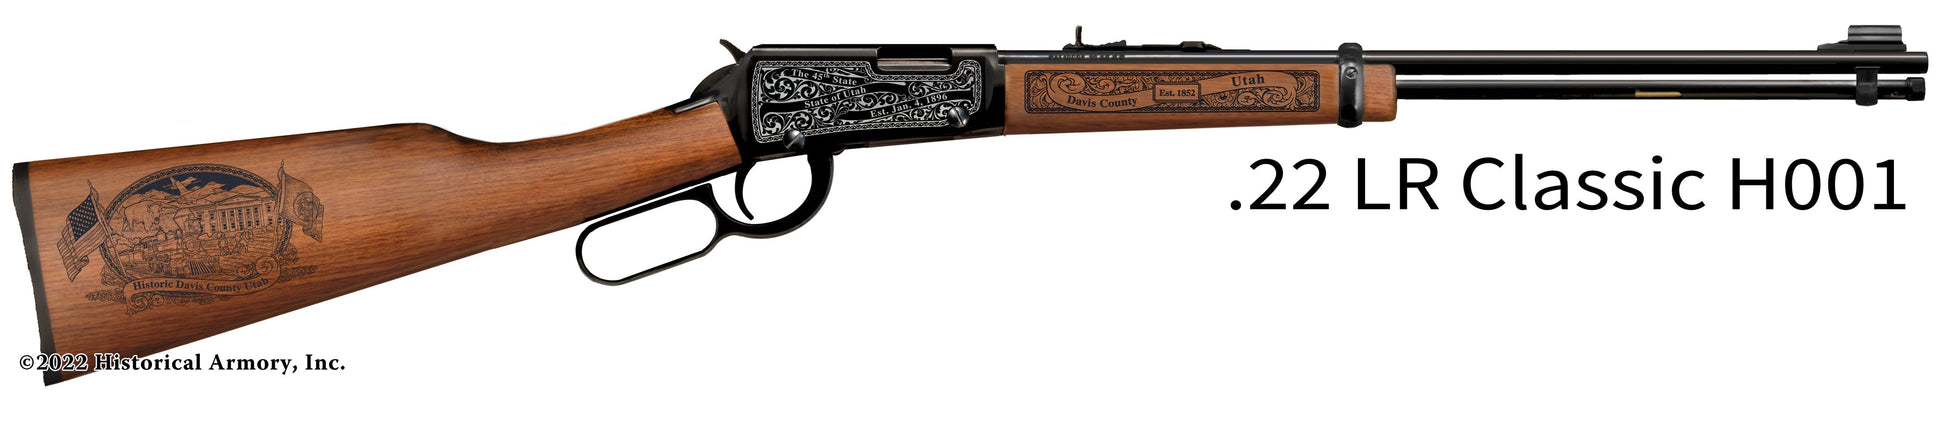 Davis County Utah Engraved Henry H001 Rifle